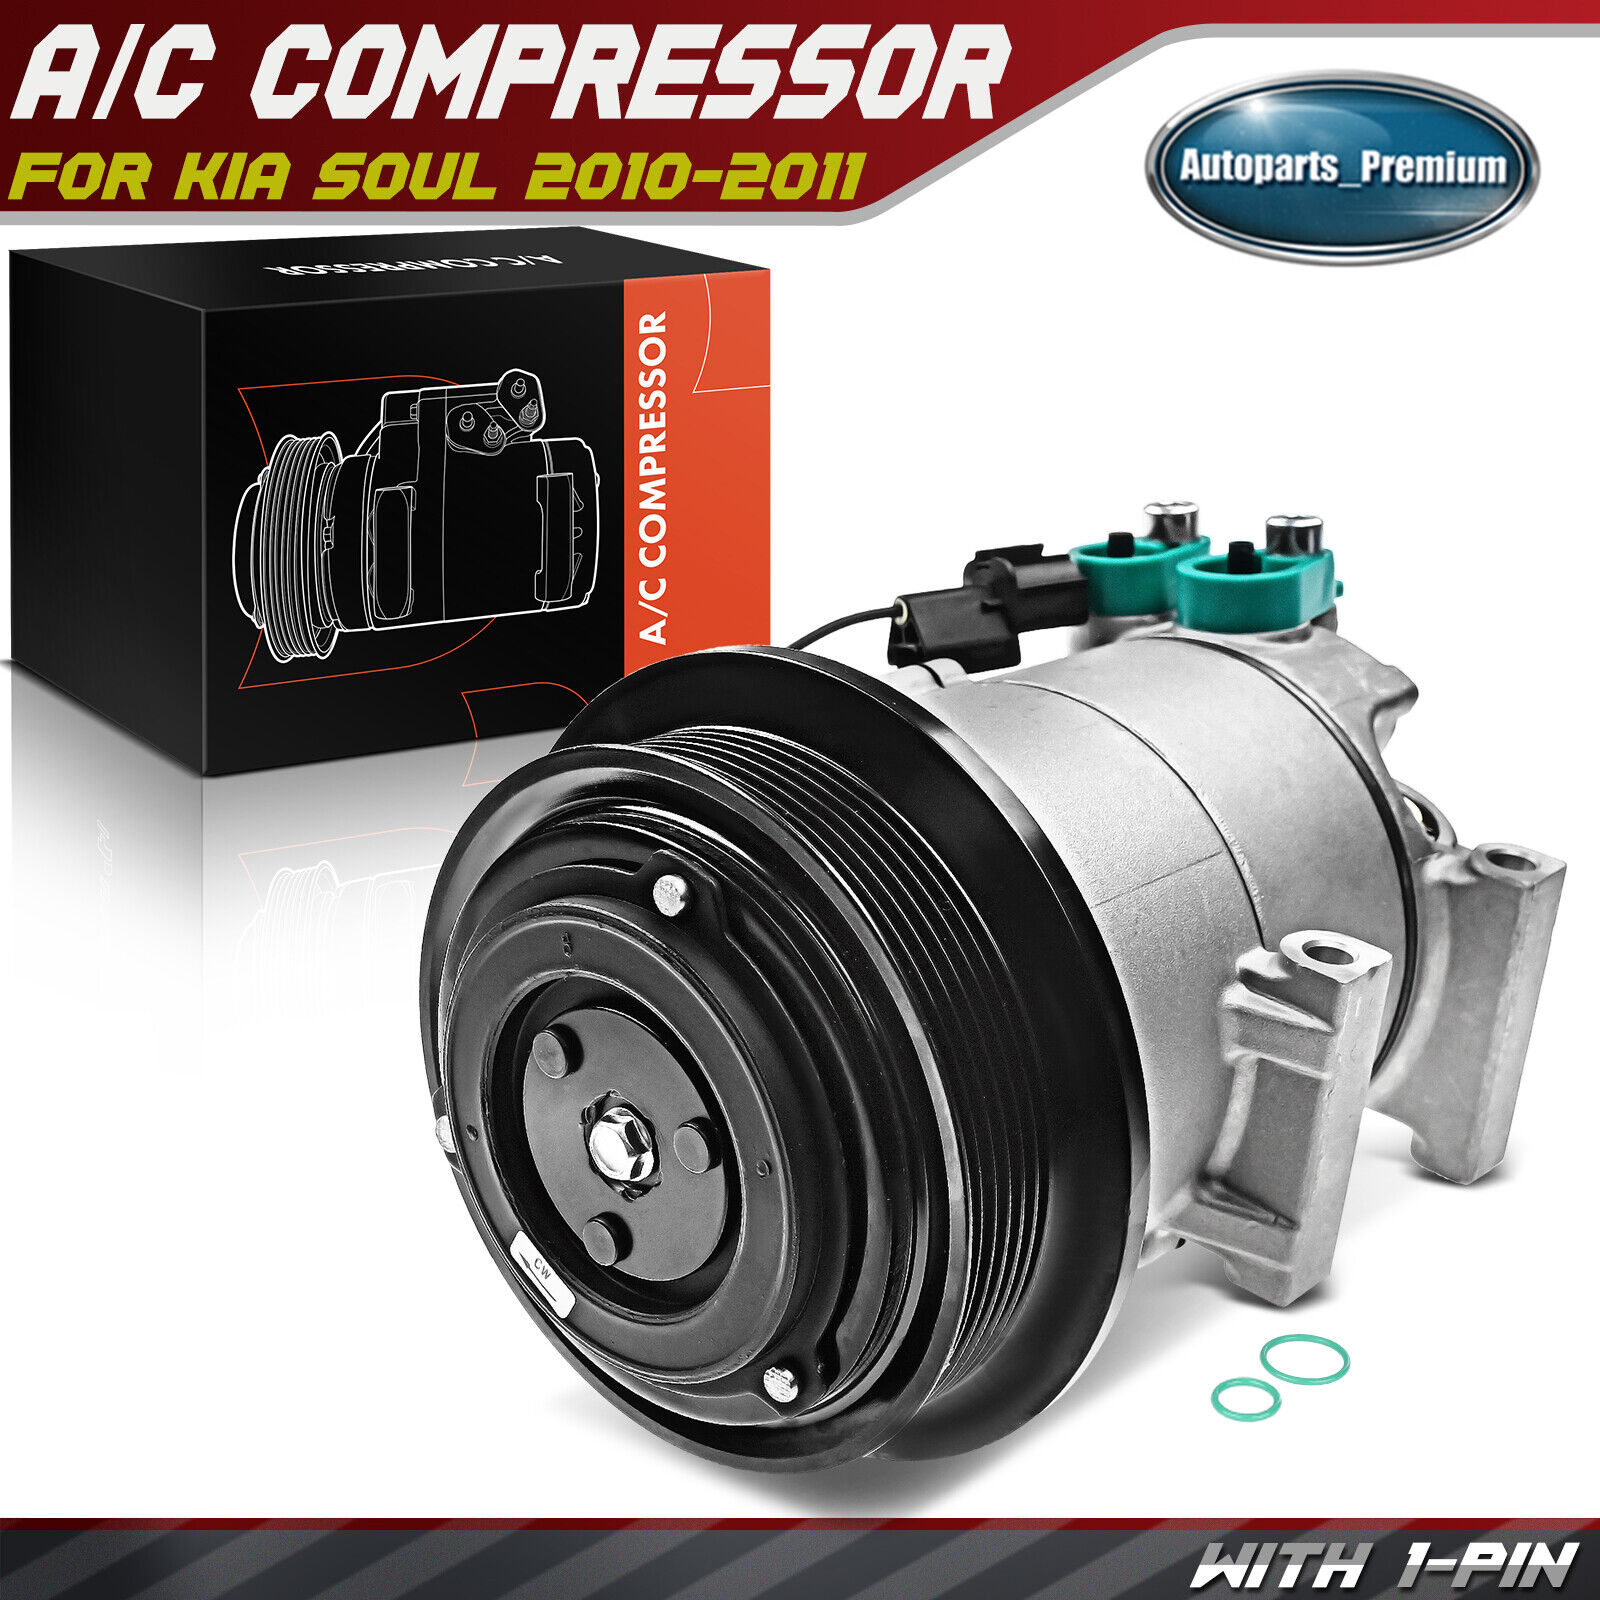 New AC Compressor with Clutch for Kia Soul 2010 2011 1.6L Hatchback 977012K051